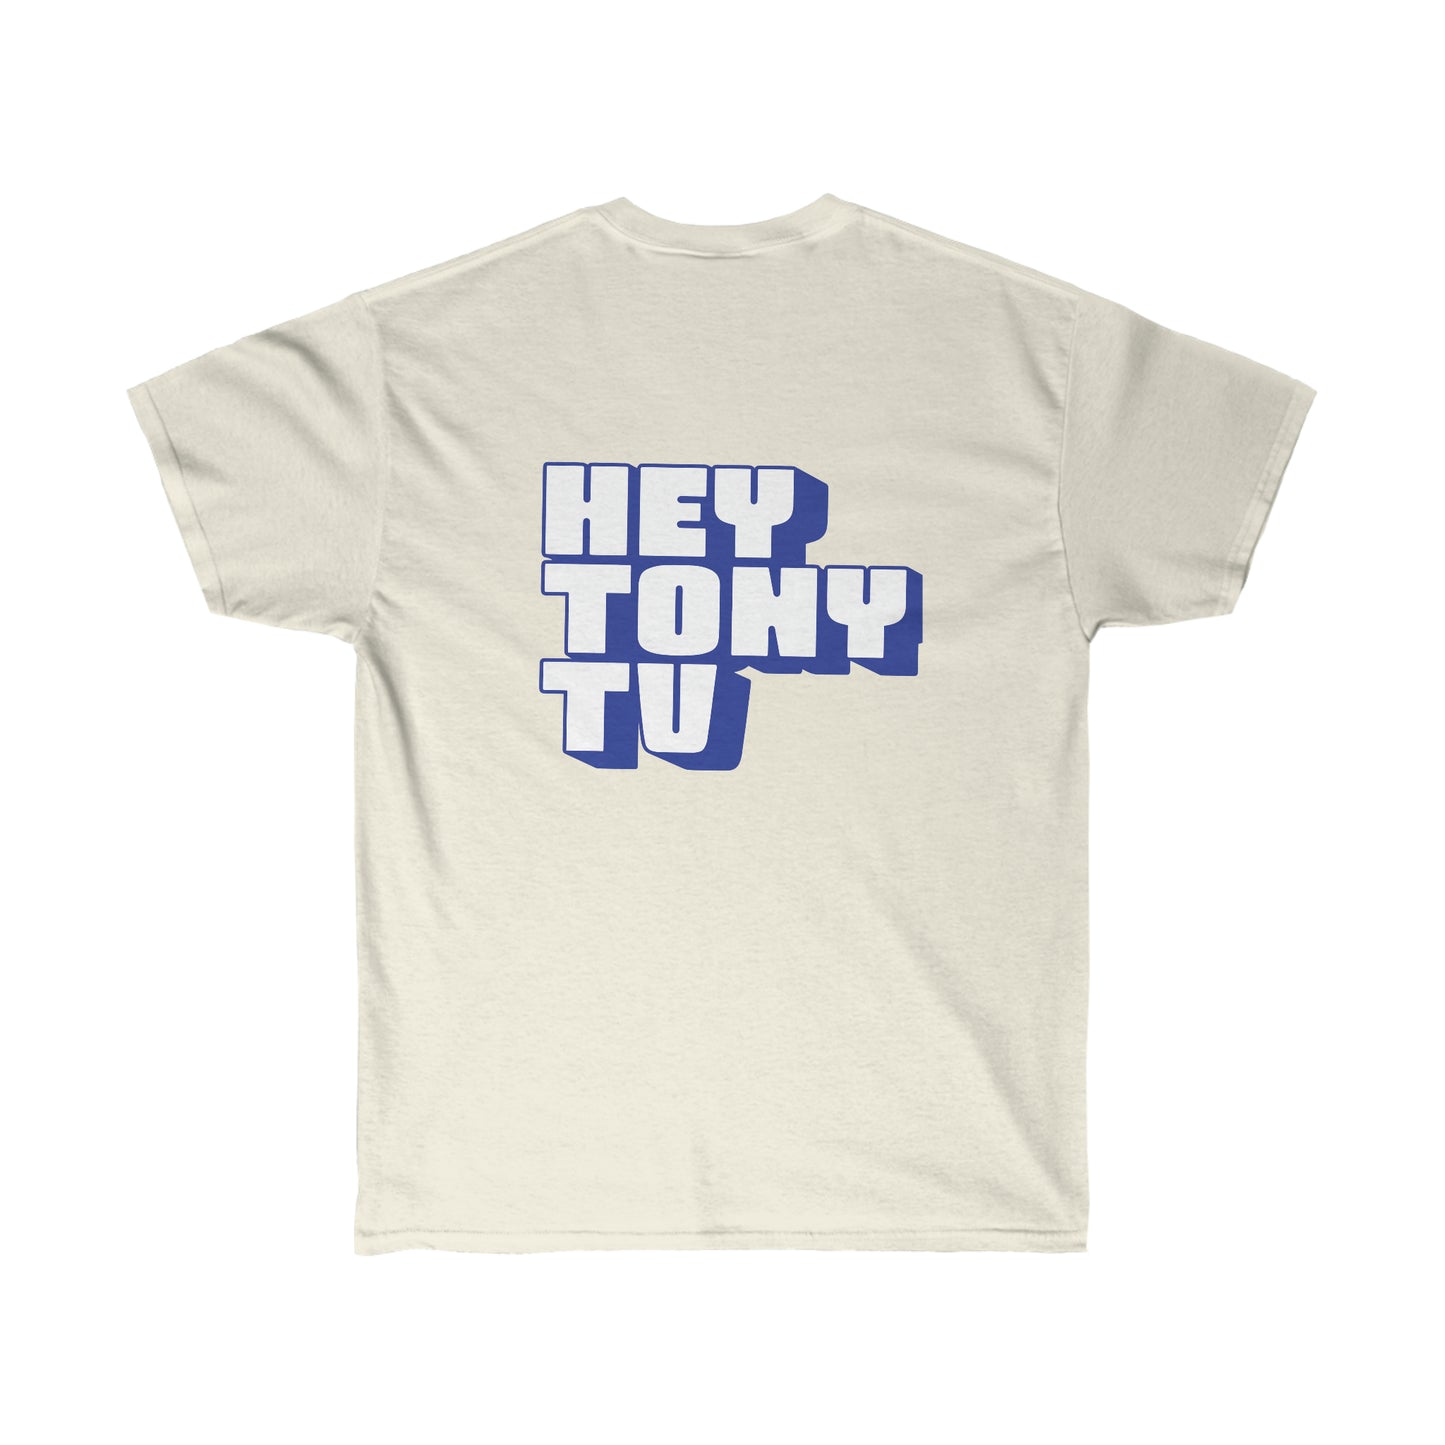 QuarterBrick High Unisex T-Shirt